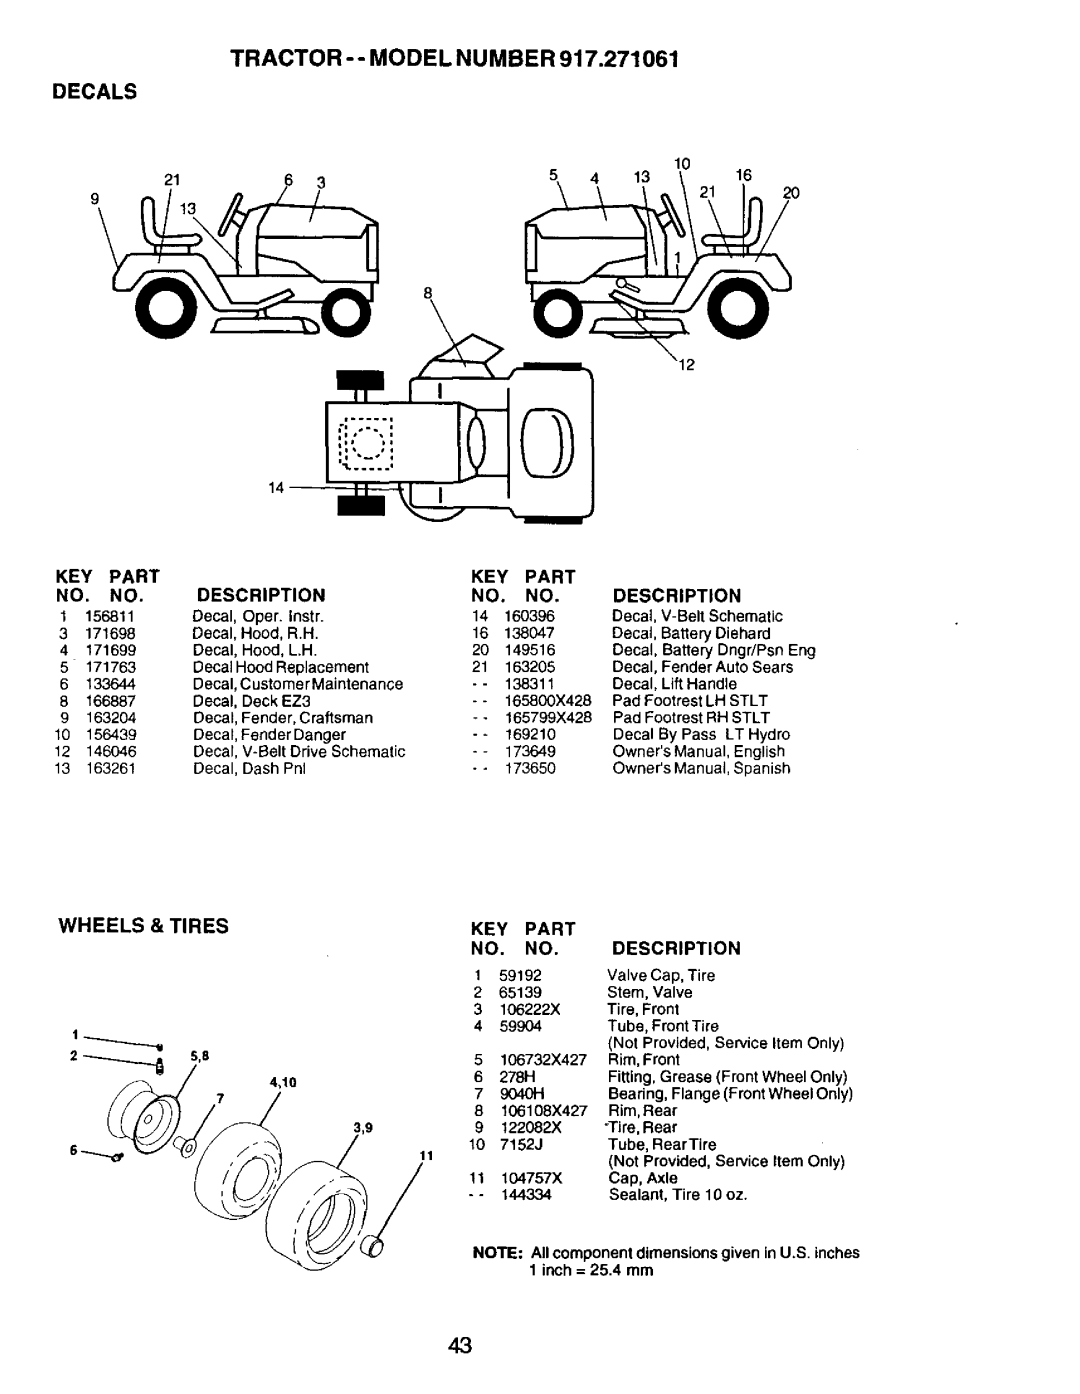 Craftsman 917.271061 owner manual Tractor -- Model Number, Decals, Wheels & Tires 